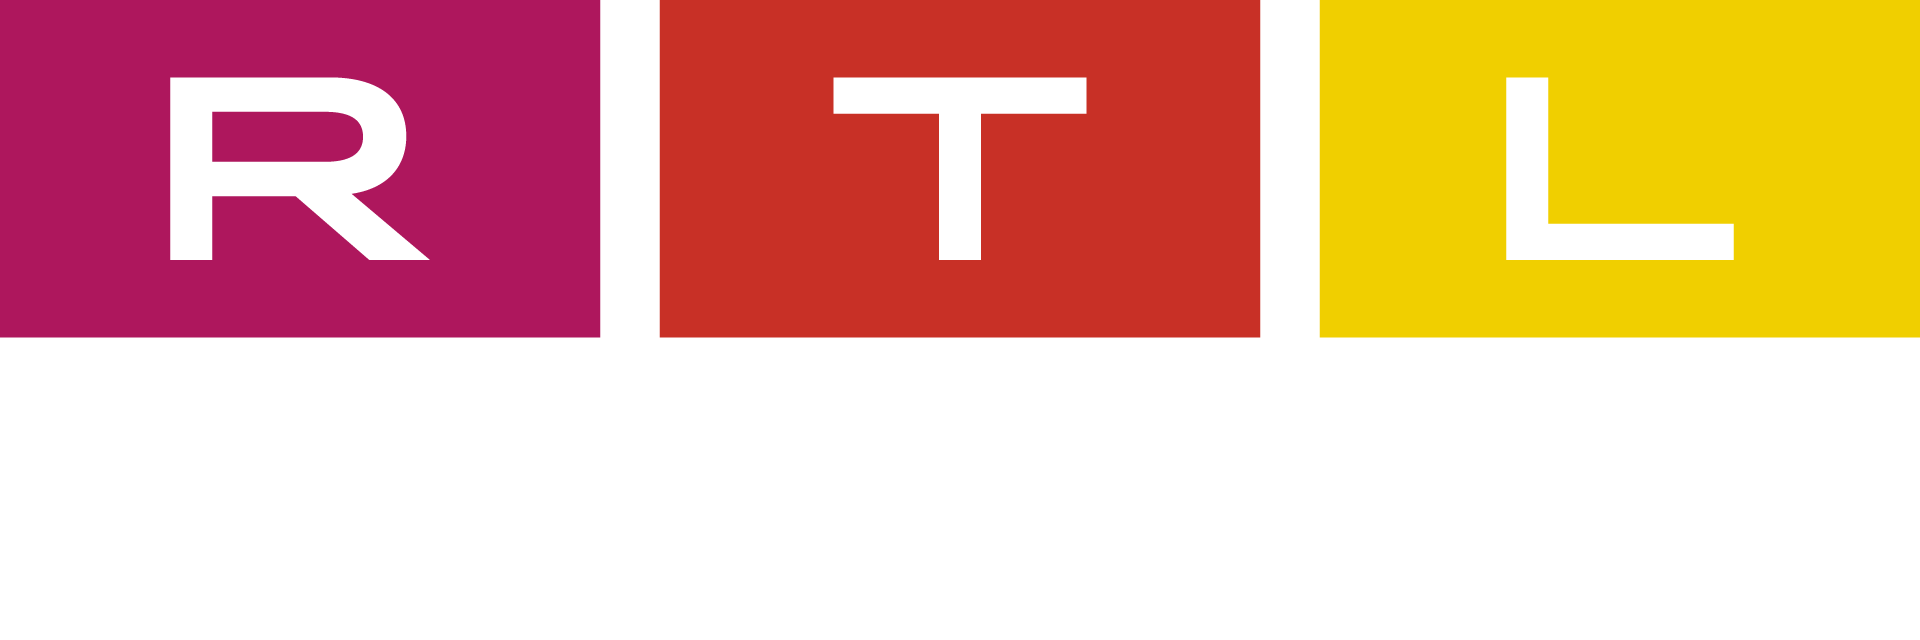 https://rtl.hu/images/RTL2_logo.png